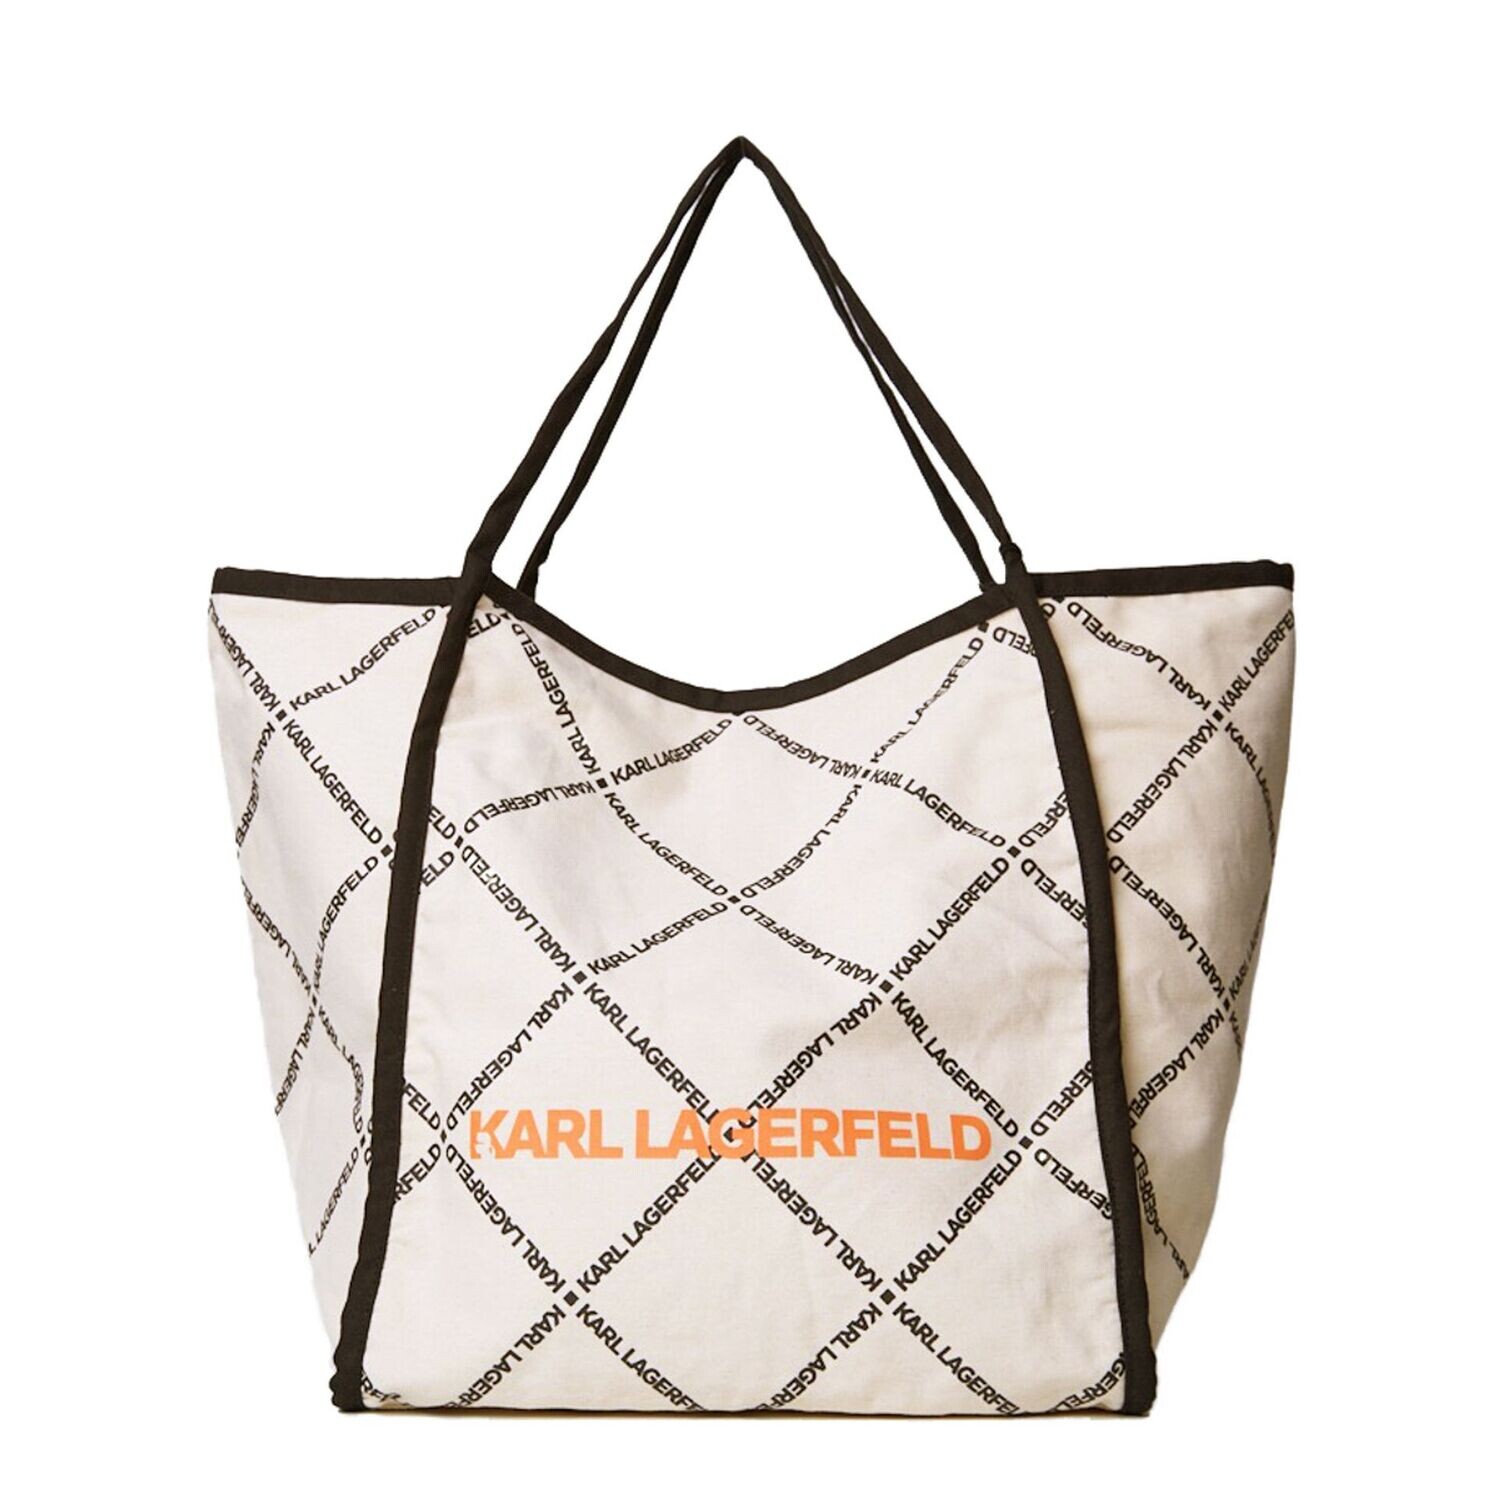 Karl Lagerfeld Patterned Bag